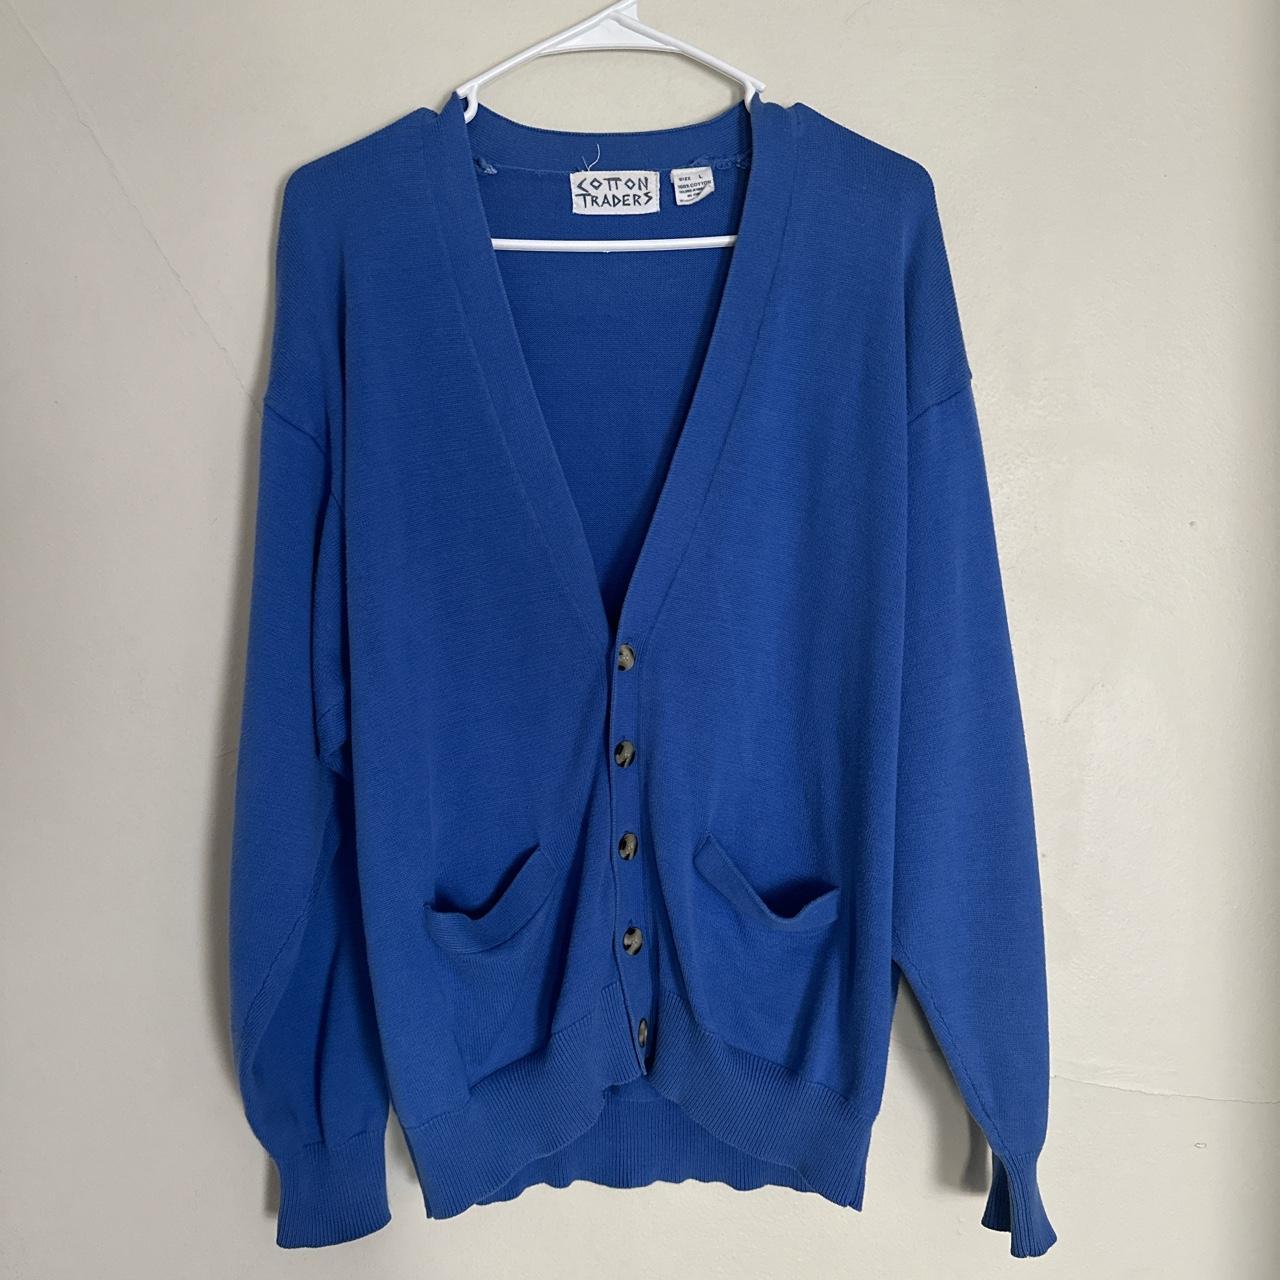 Cotton Traders Women's Blue Cardigan | Depop